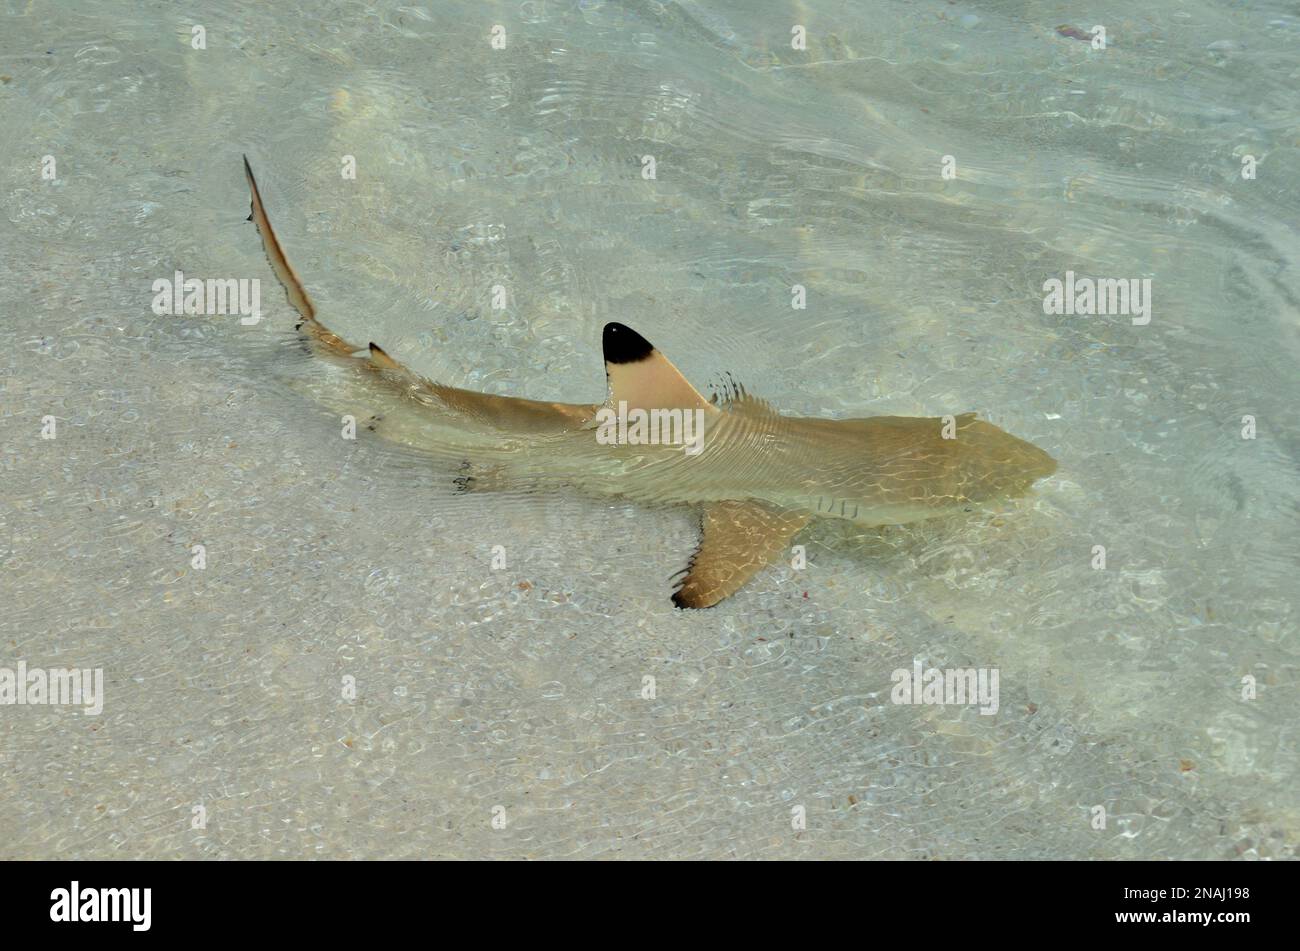 Carcharhinus melanopterus, Schwarzspitzen-Riffhai, squalo della barriera corallina, Jungtier in Lagune, juvenil in laguna, Embudu, Malediven, maldive Foto Stock